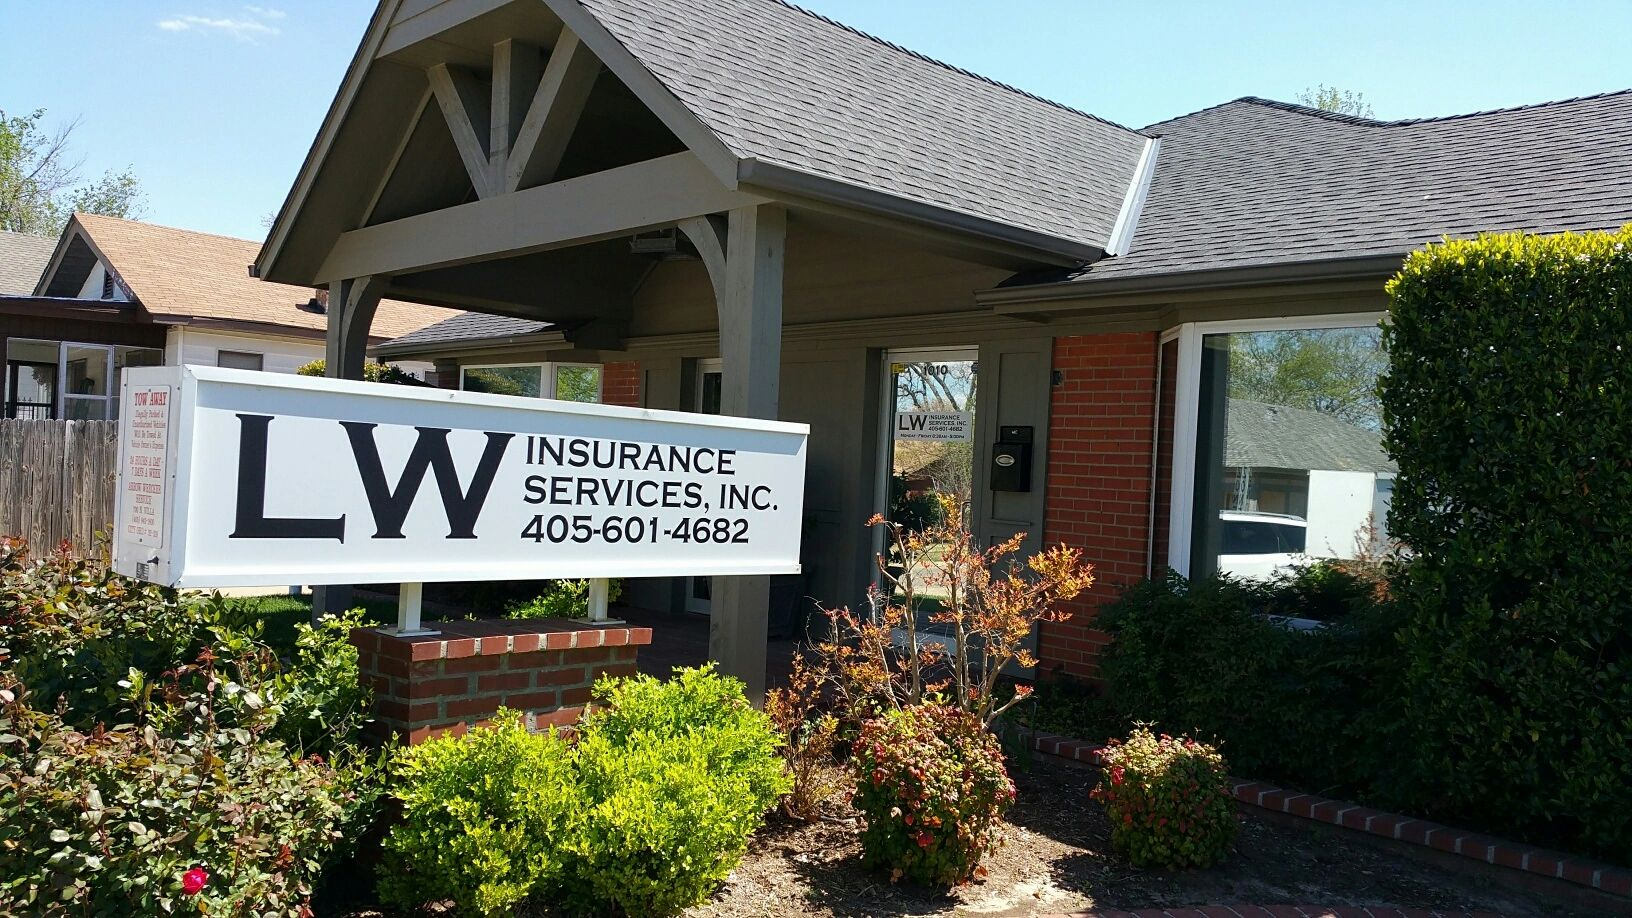 Lw Insurance Services Inc Insurance Oklahoma City Oklahoma with regard to measurements 1632 X 918